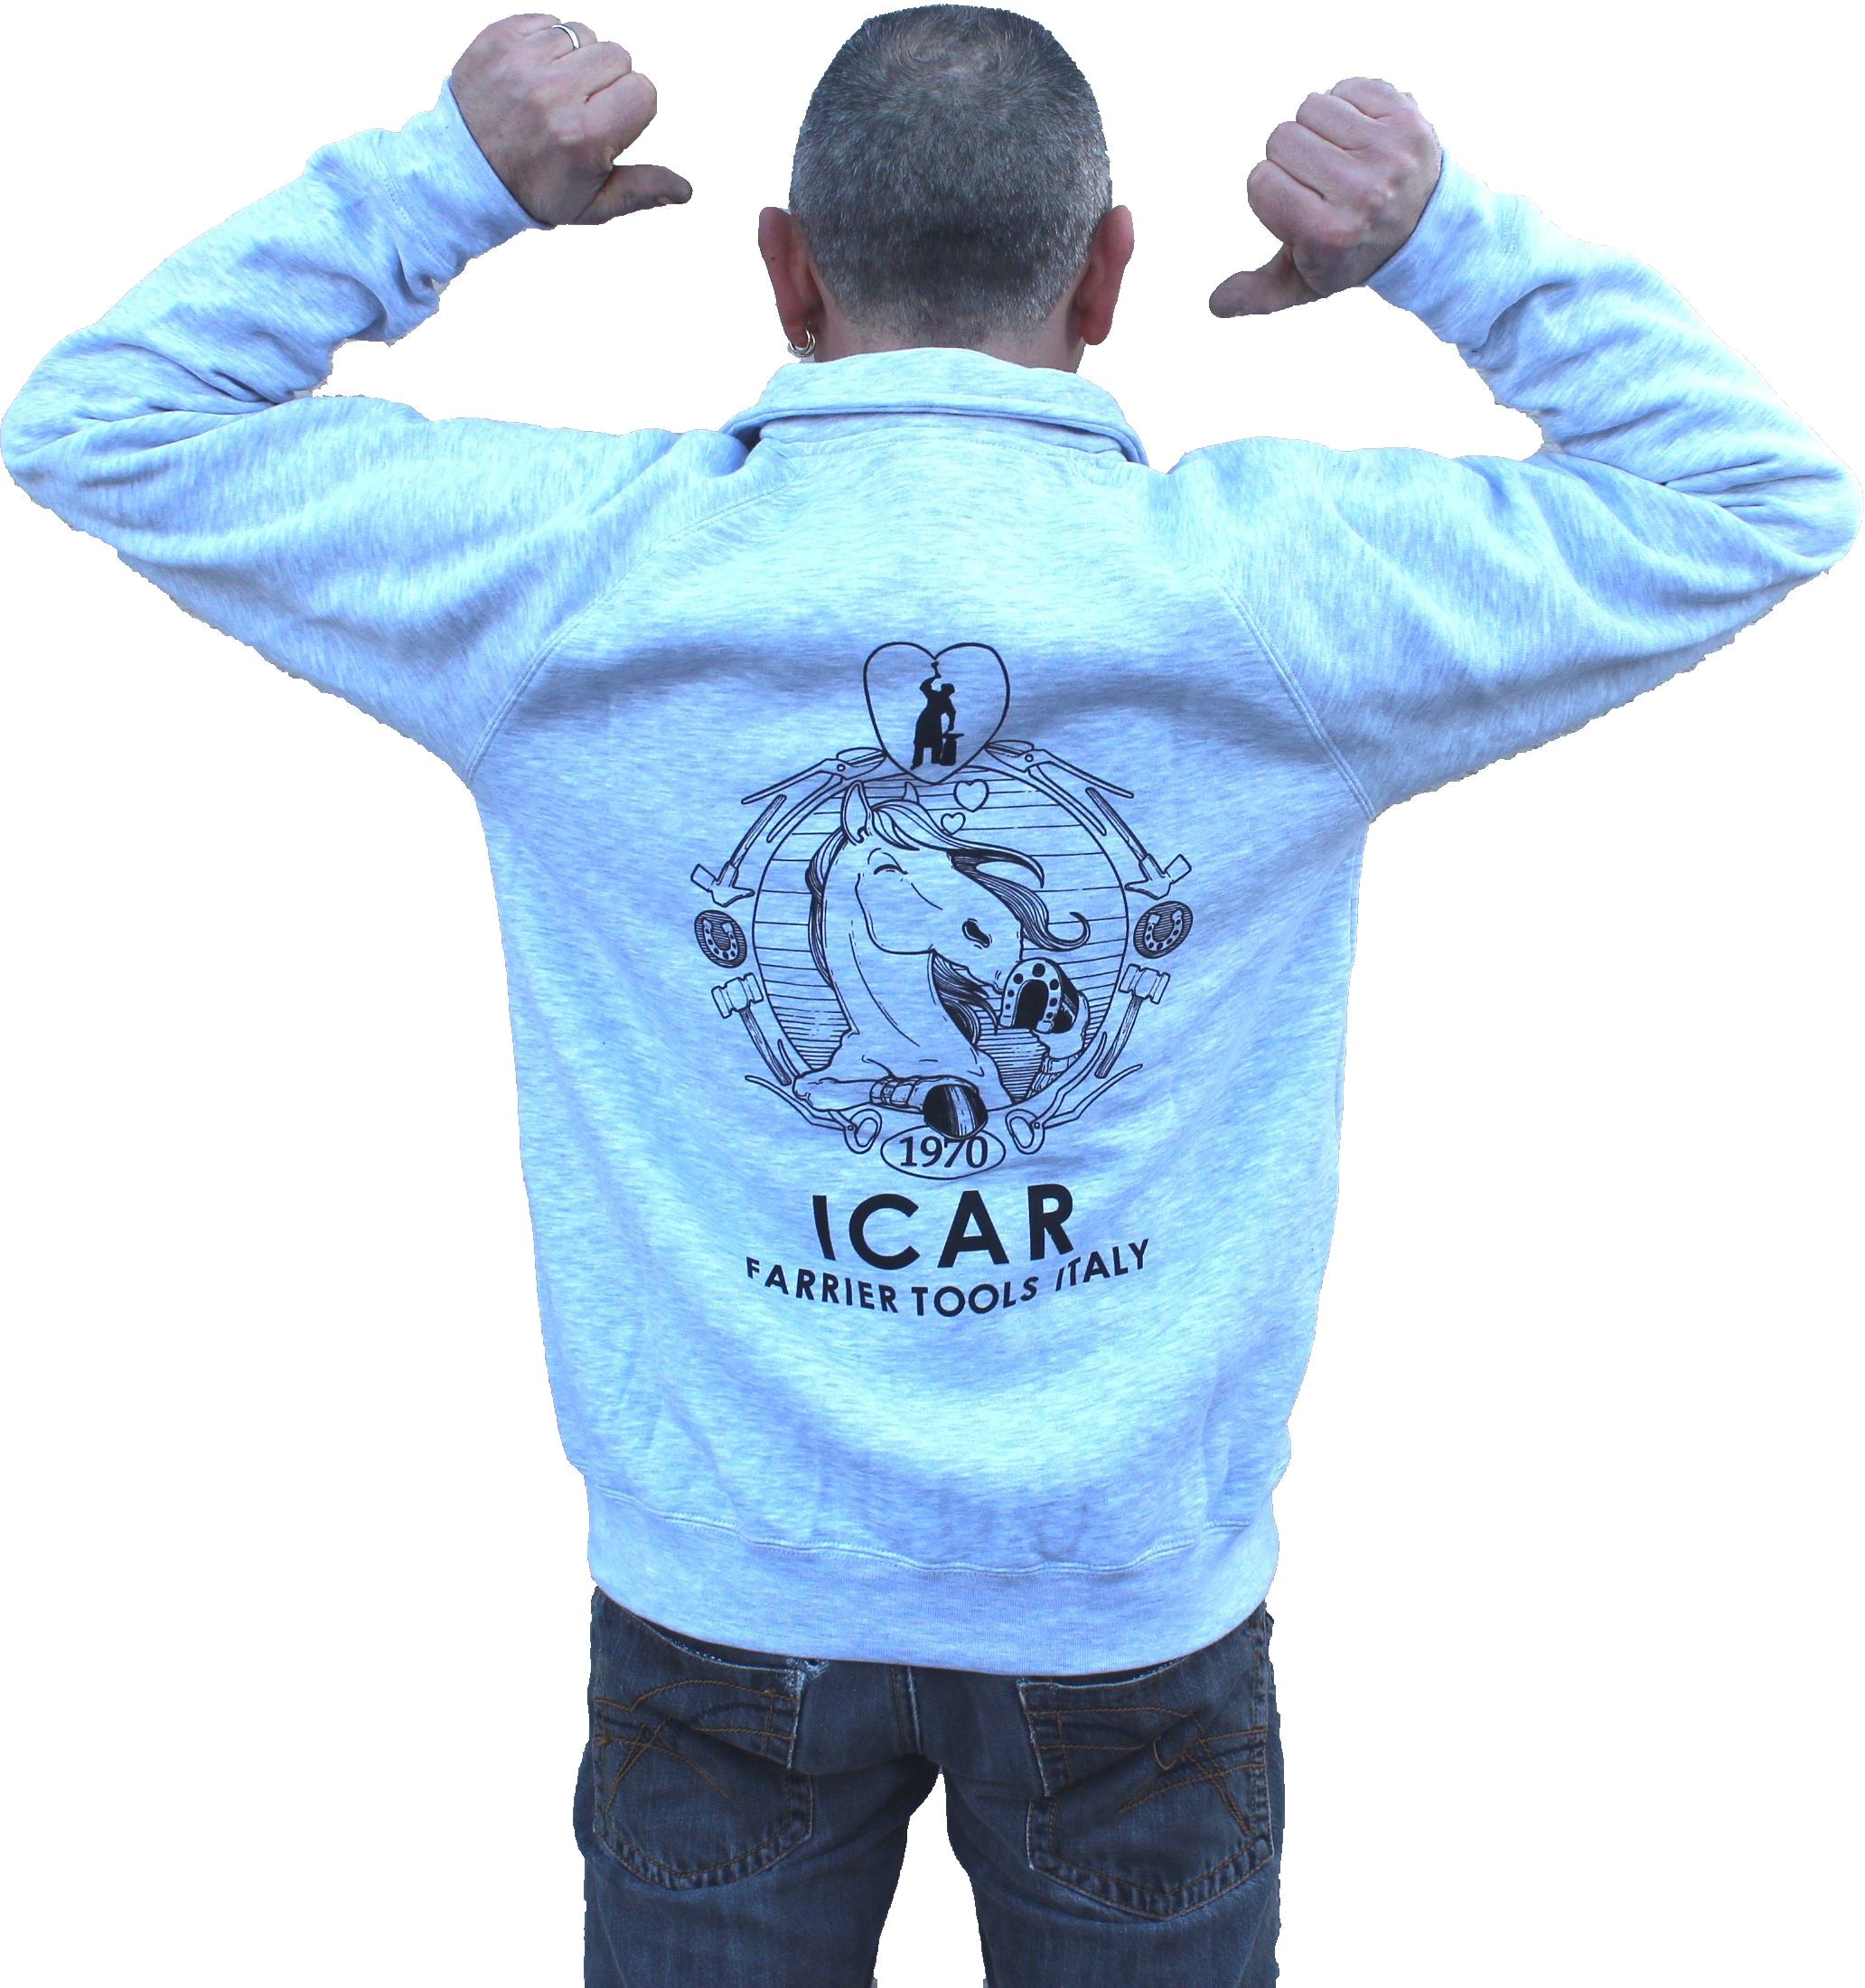 icar product image